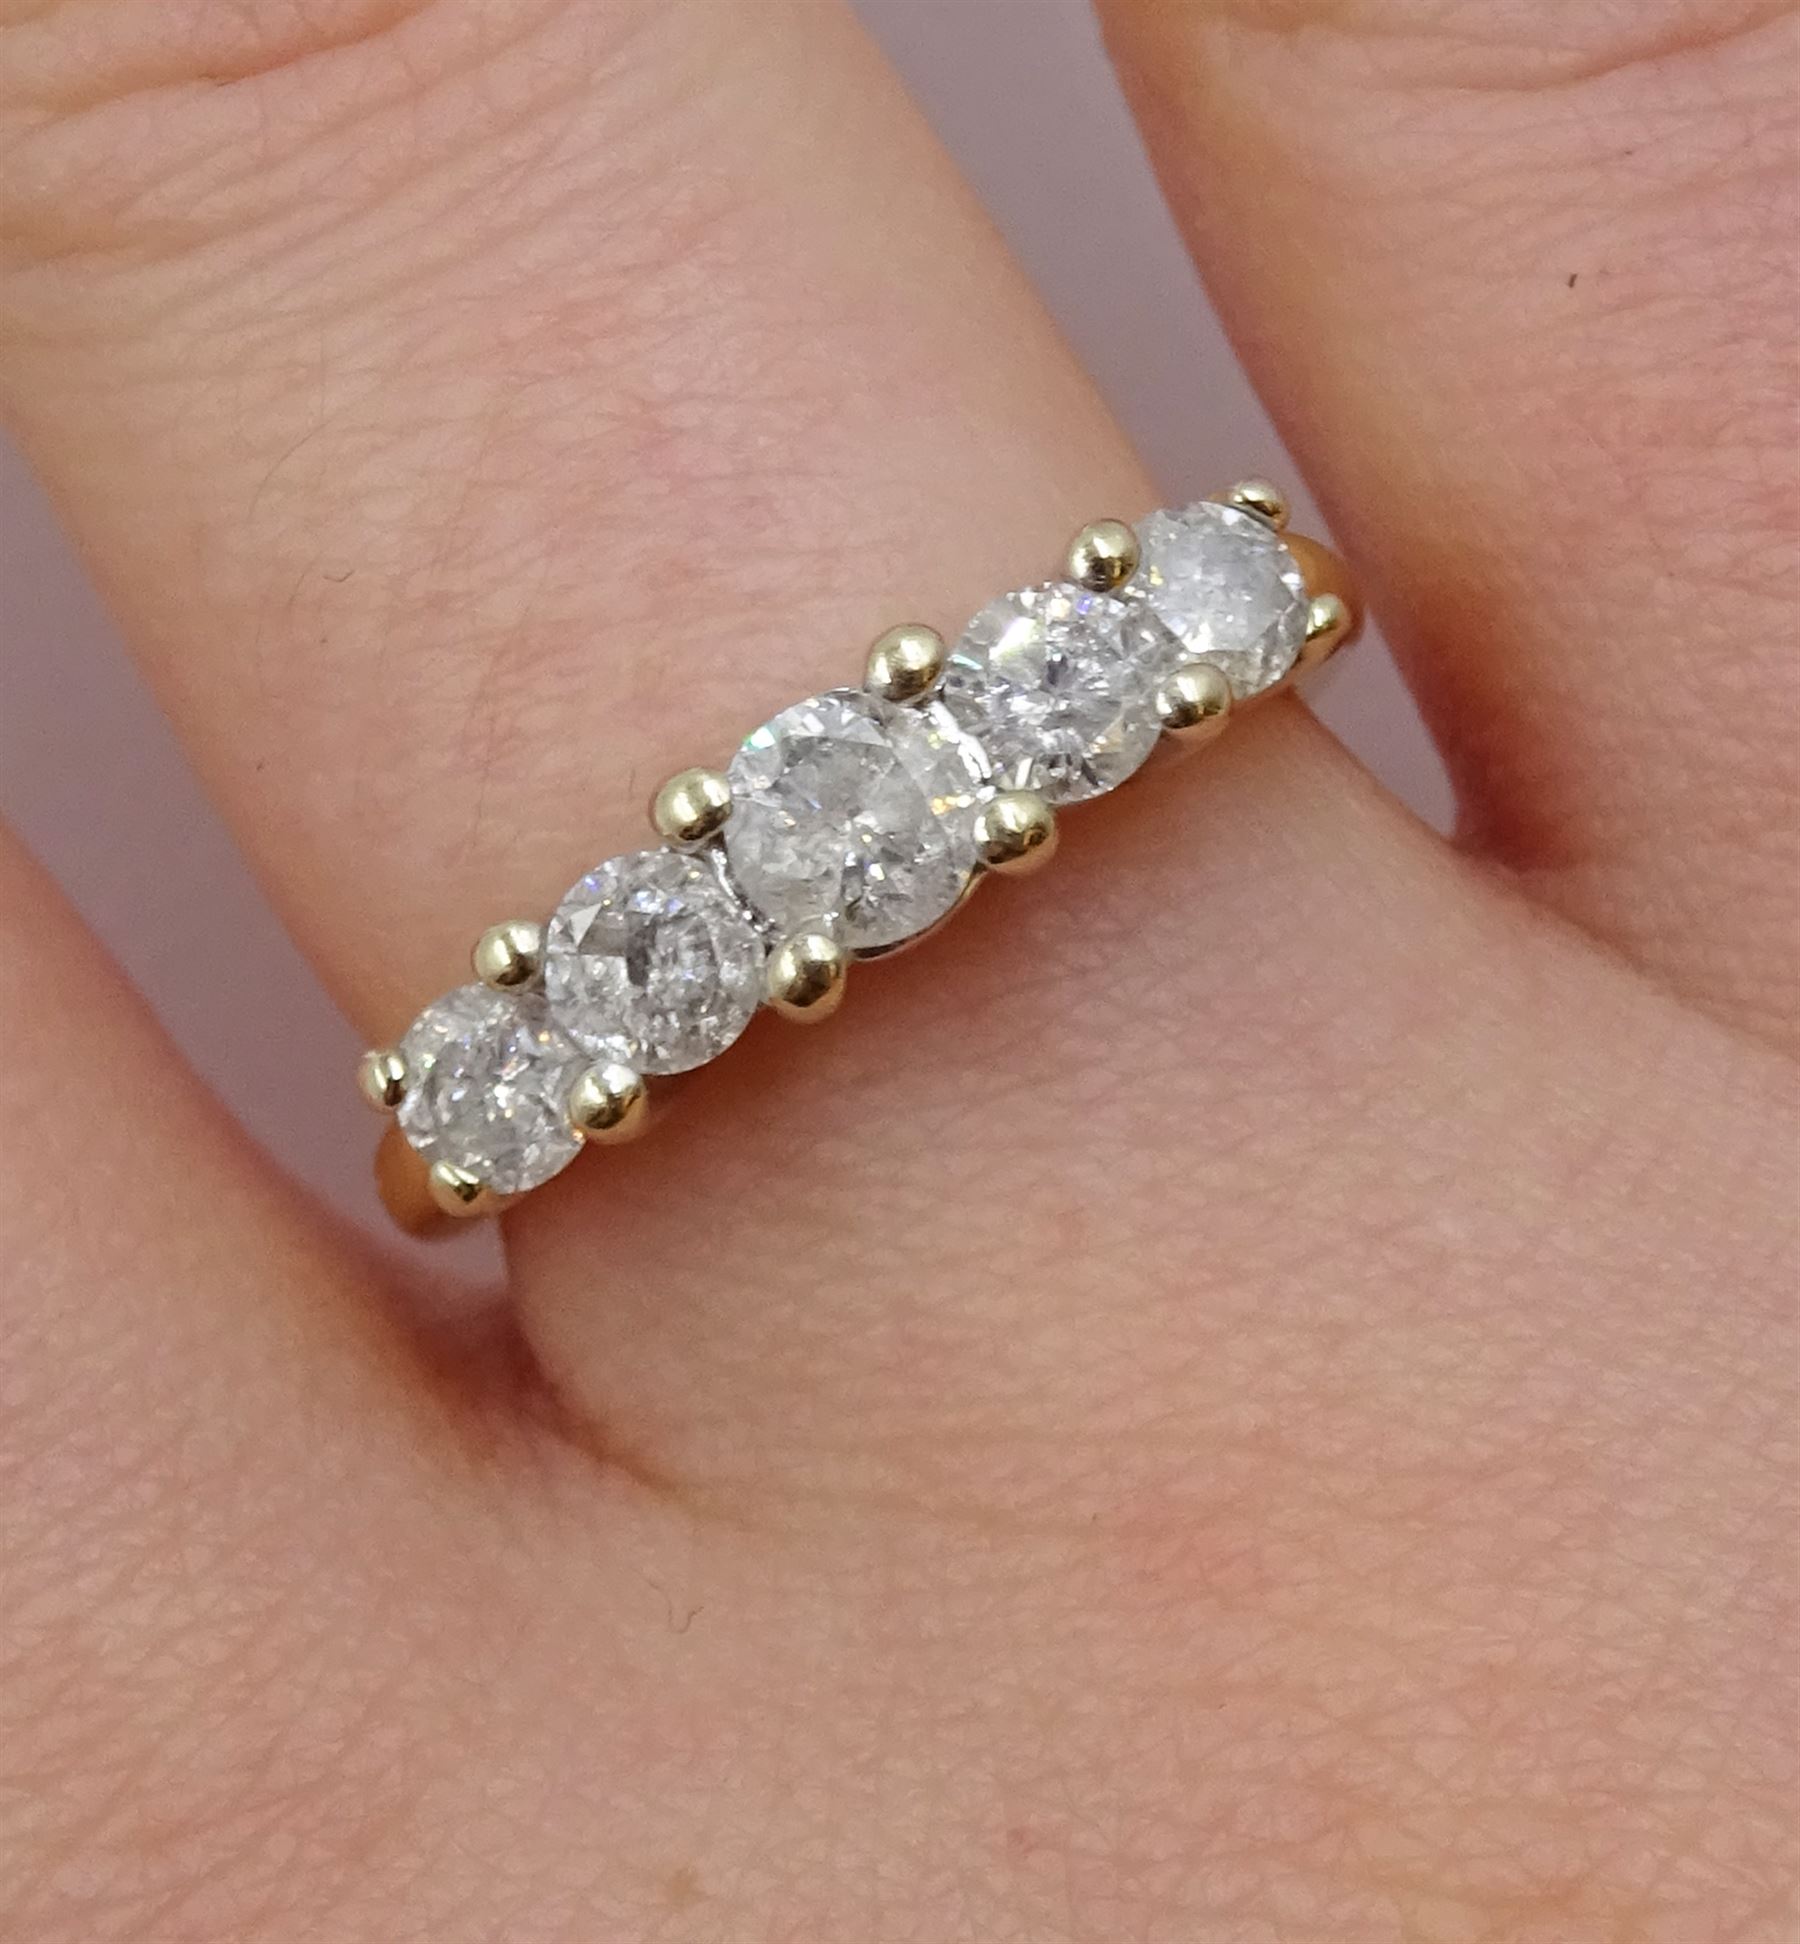 18ct gold five stone round brilliant cut diamond ring - Image 2 of 4